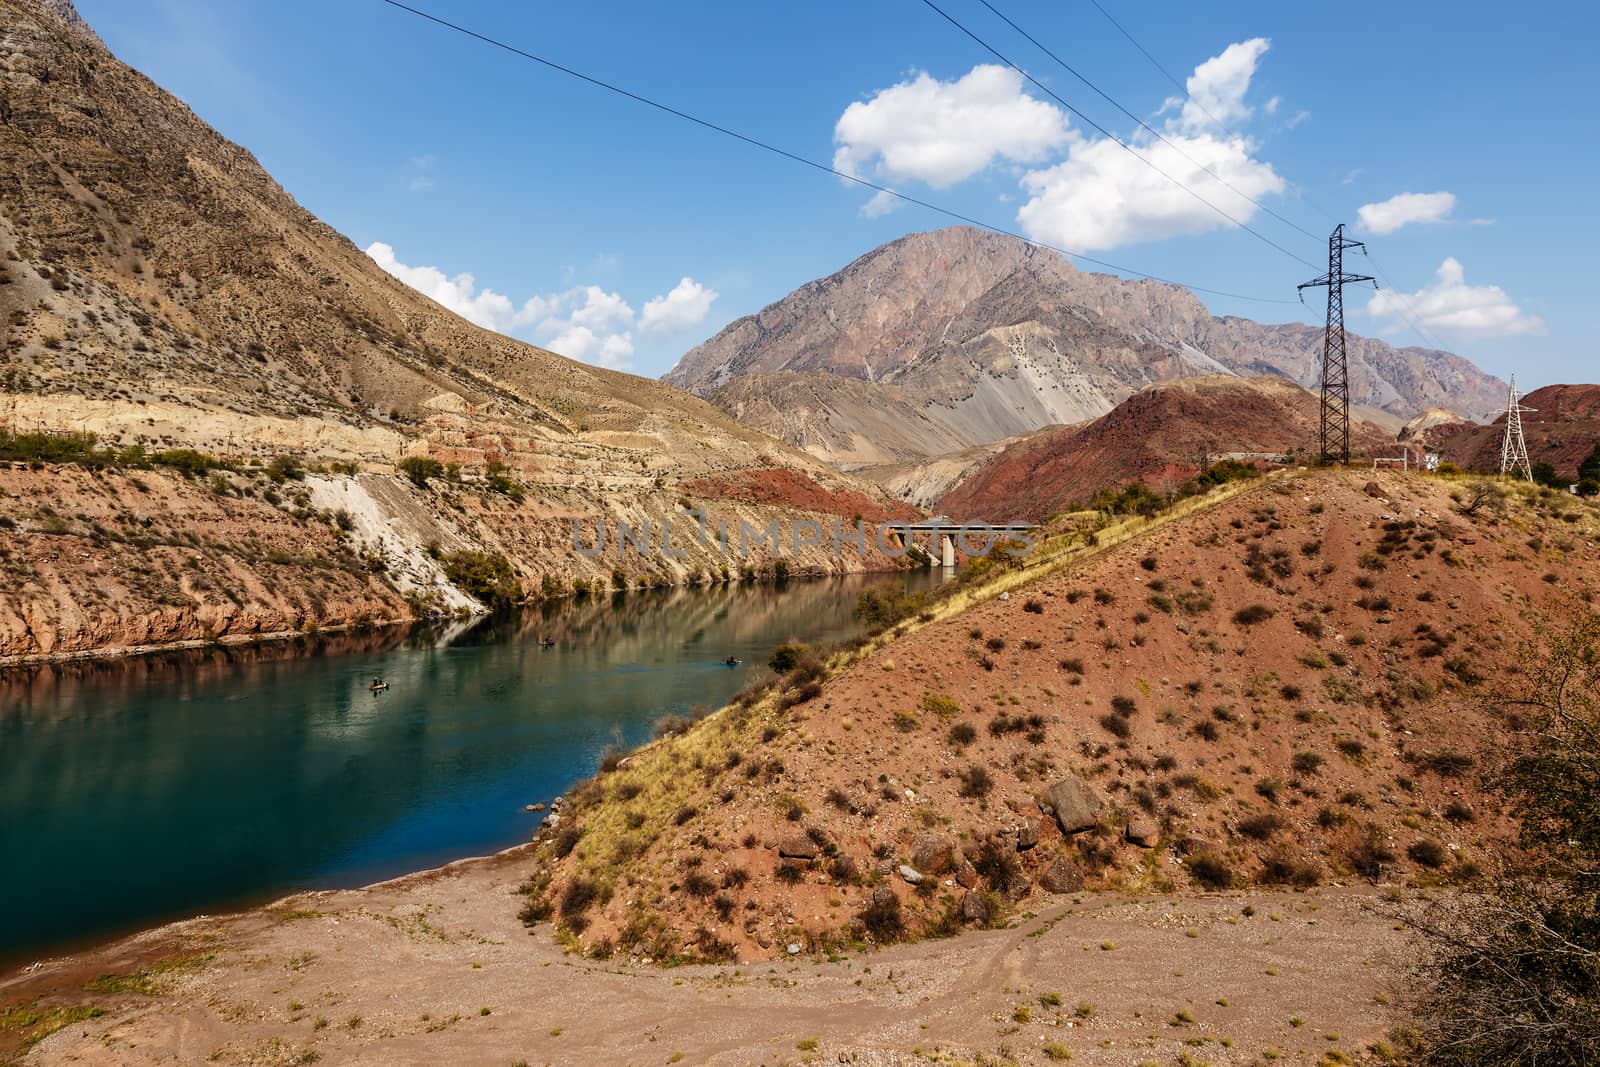 The Naryn River in the Tian Shan mountains, Karakol Kyrgyzstan